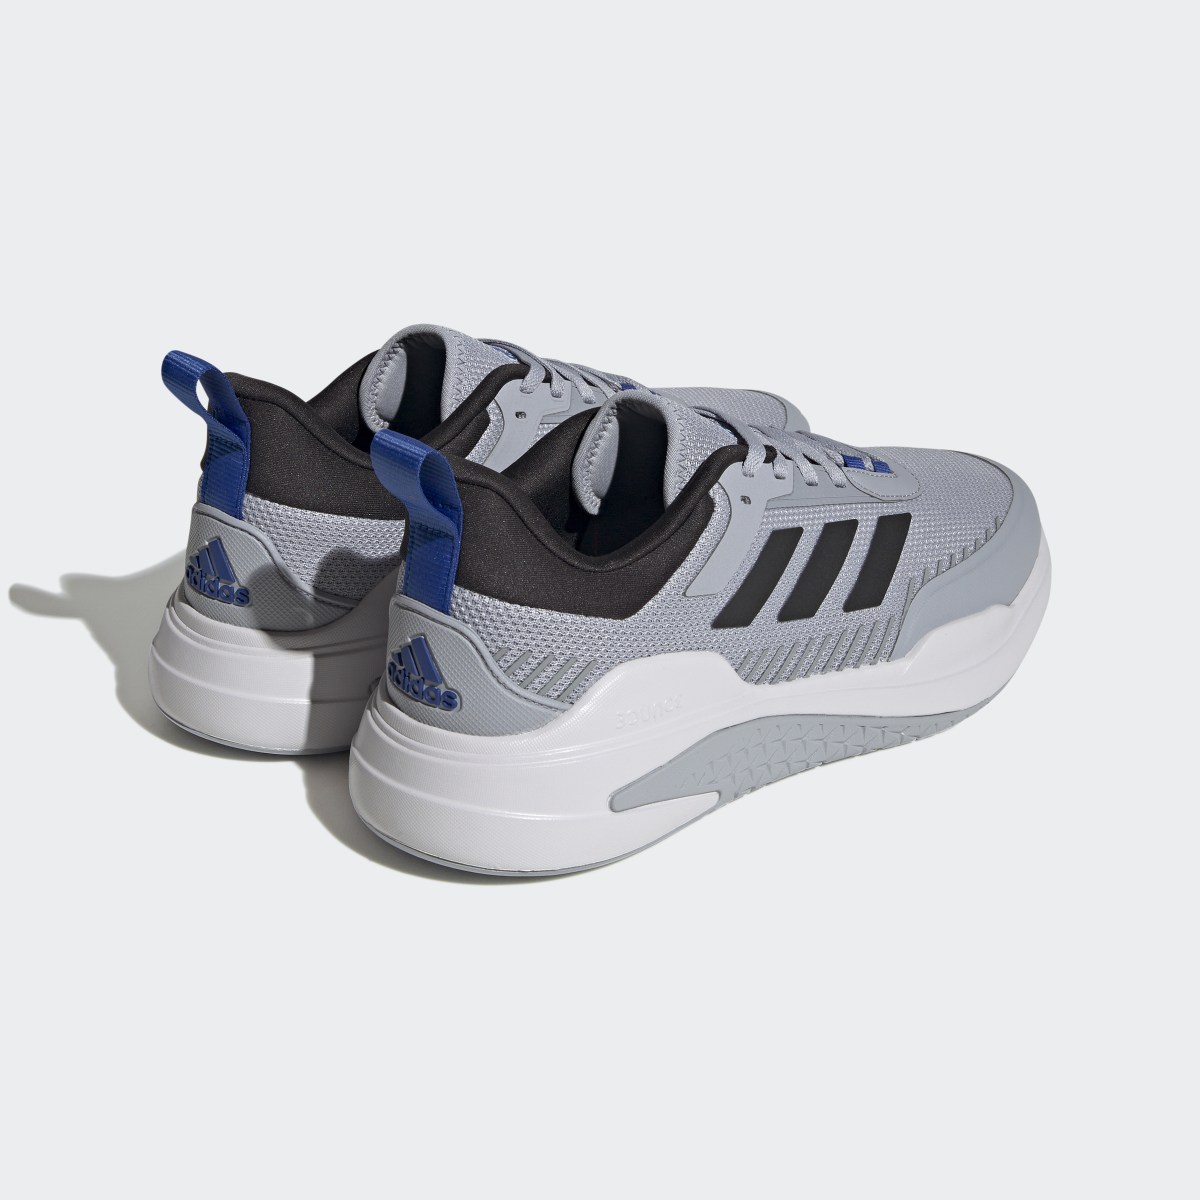 Adidas Trainer V Shoes. 6